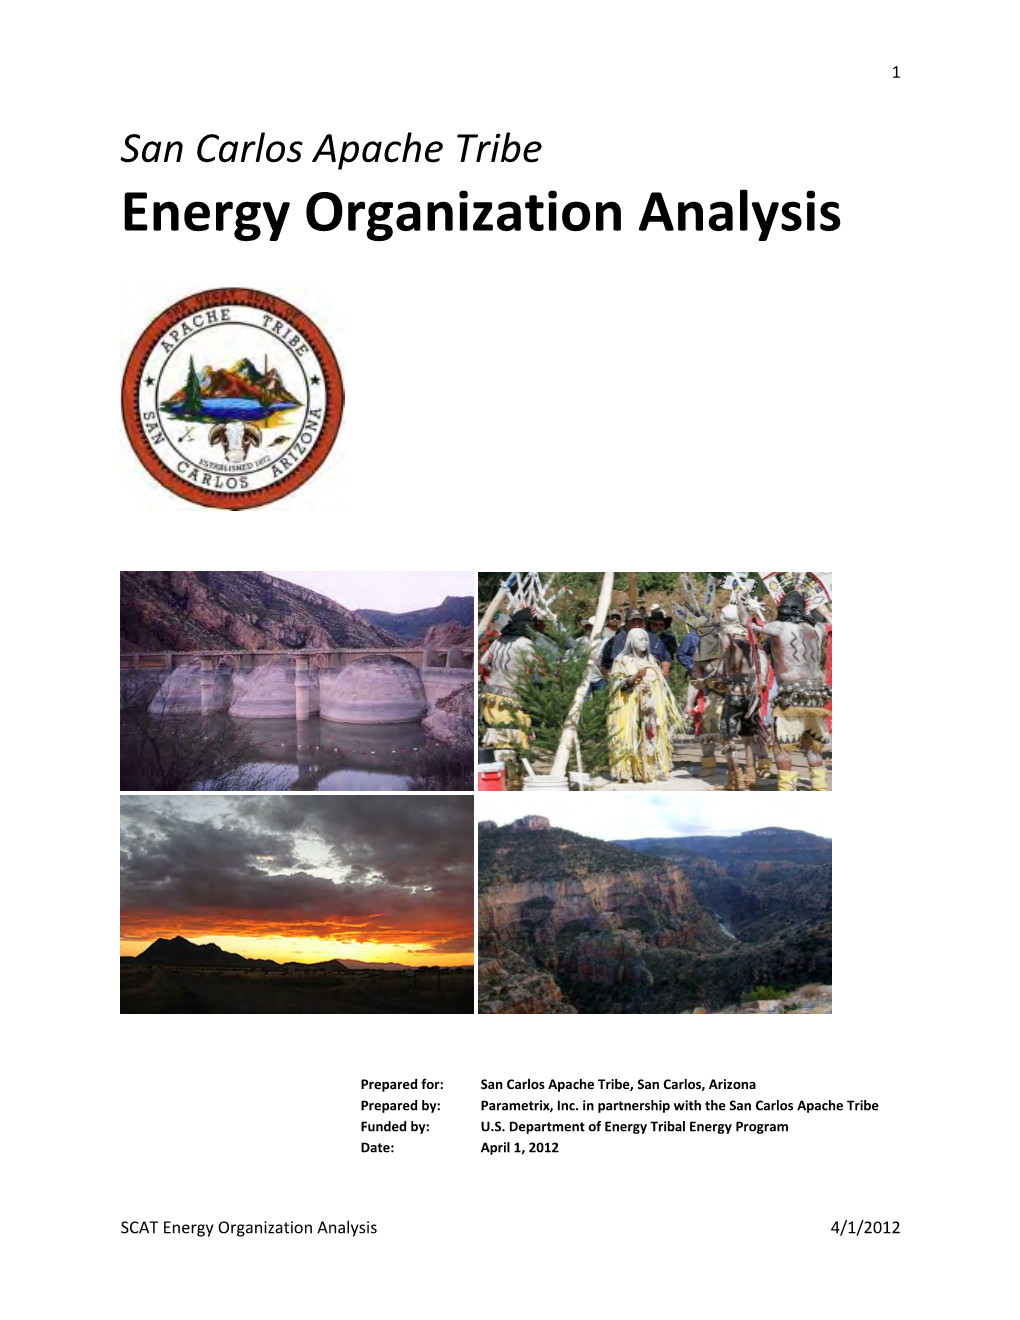 San Carlos Apache Tribe Energy Organization Analysis